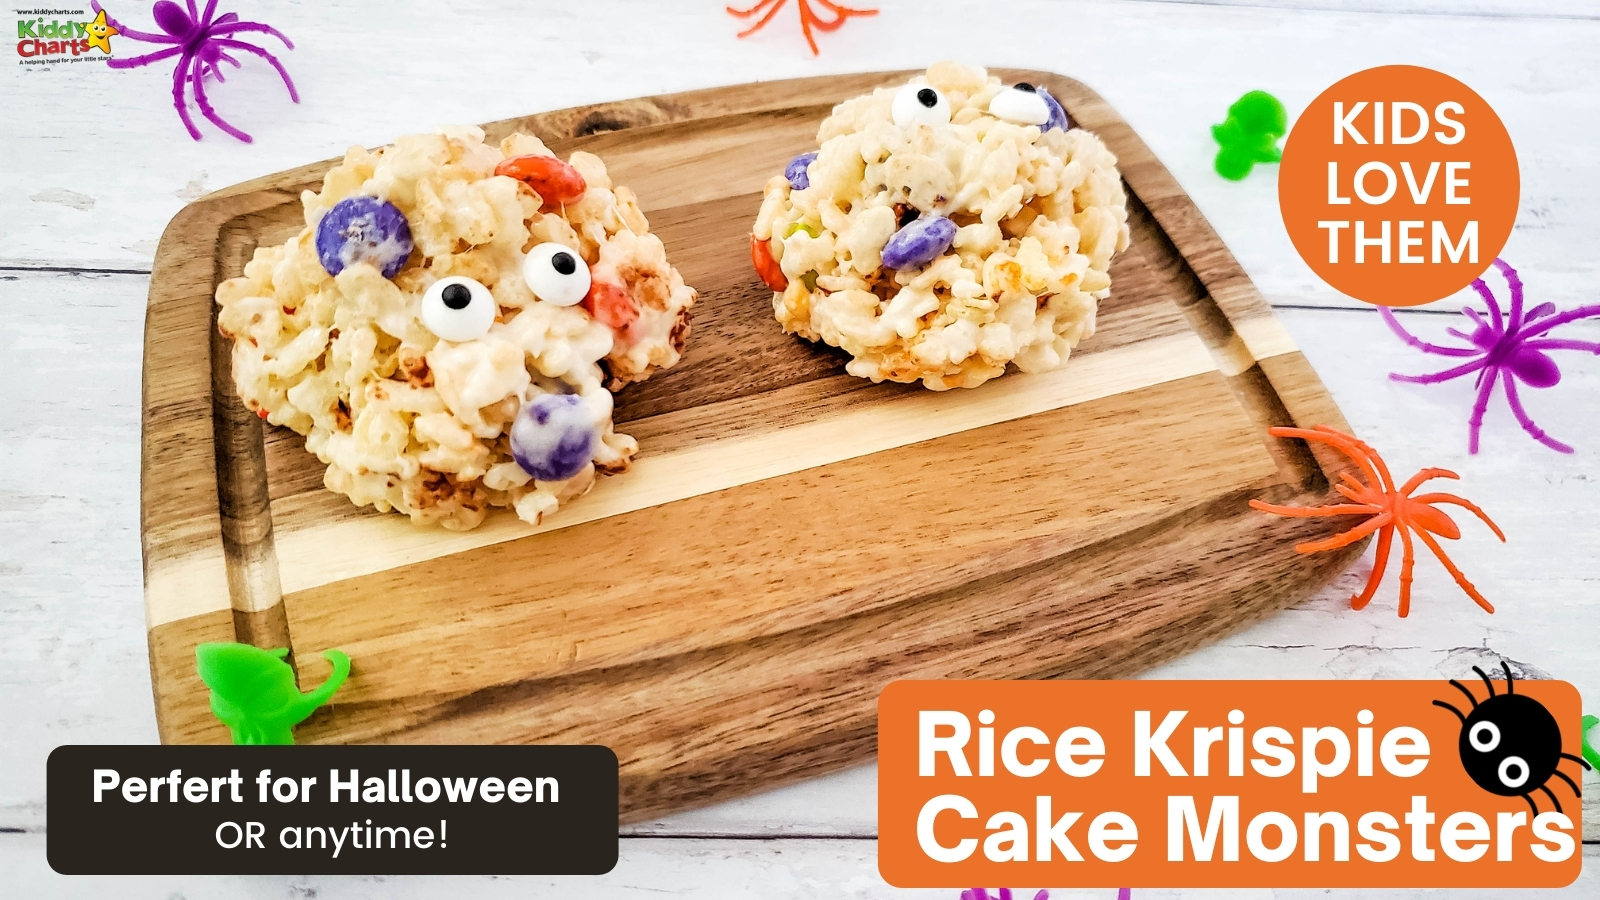 Monster Rice Krispie Treats {EASY + Kid-Approved}